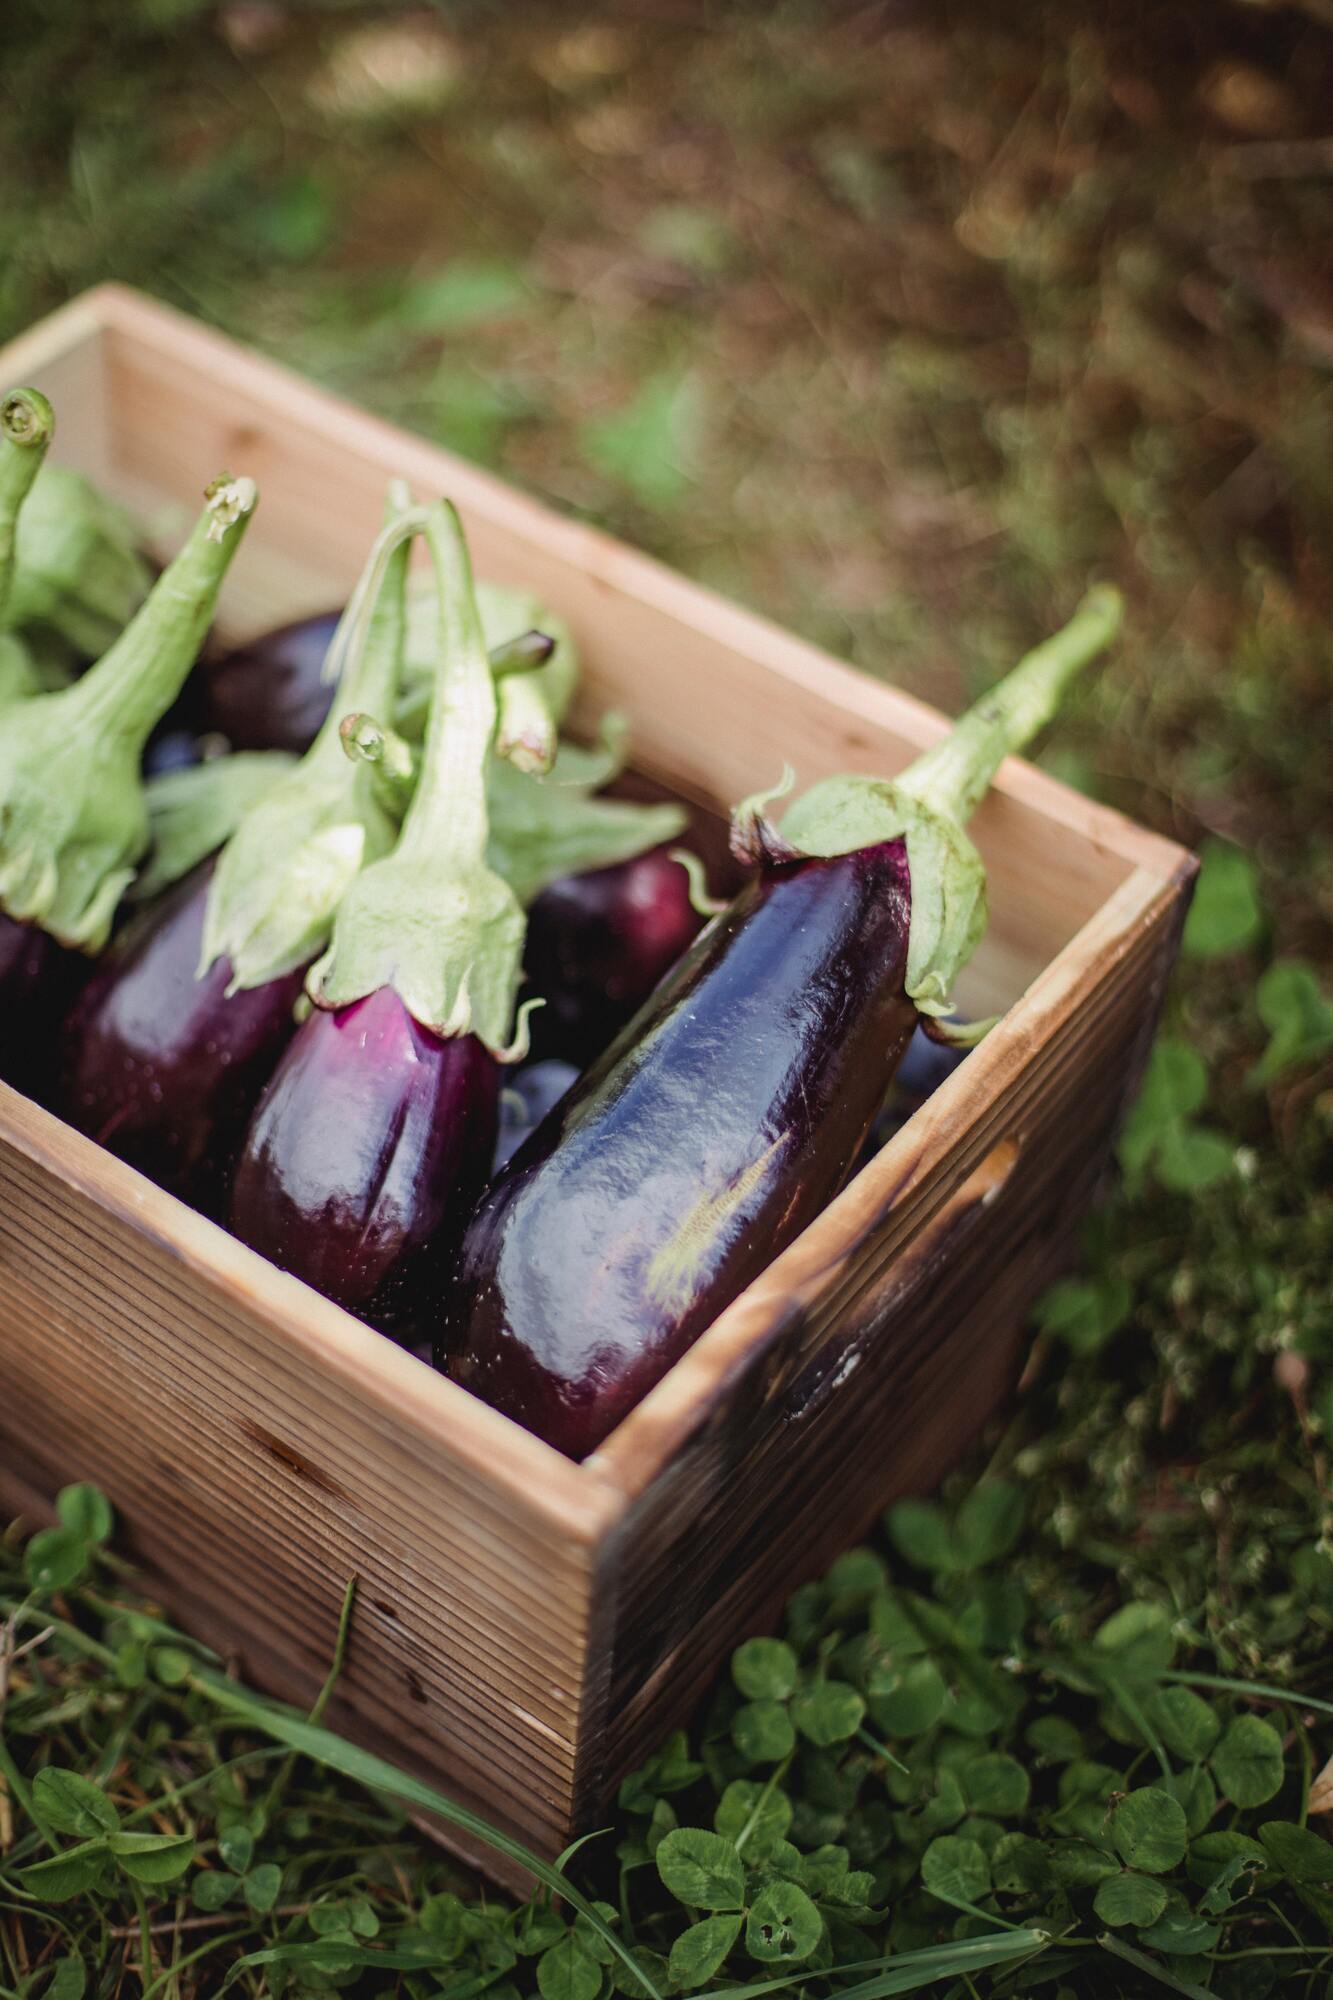 How to cook delicious eggplants